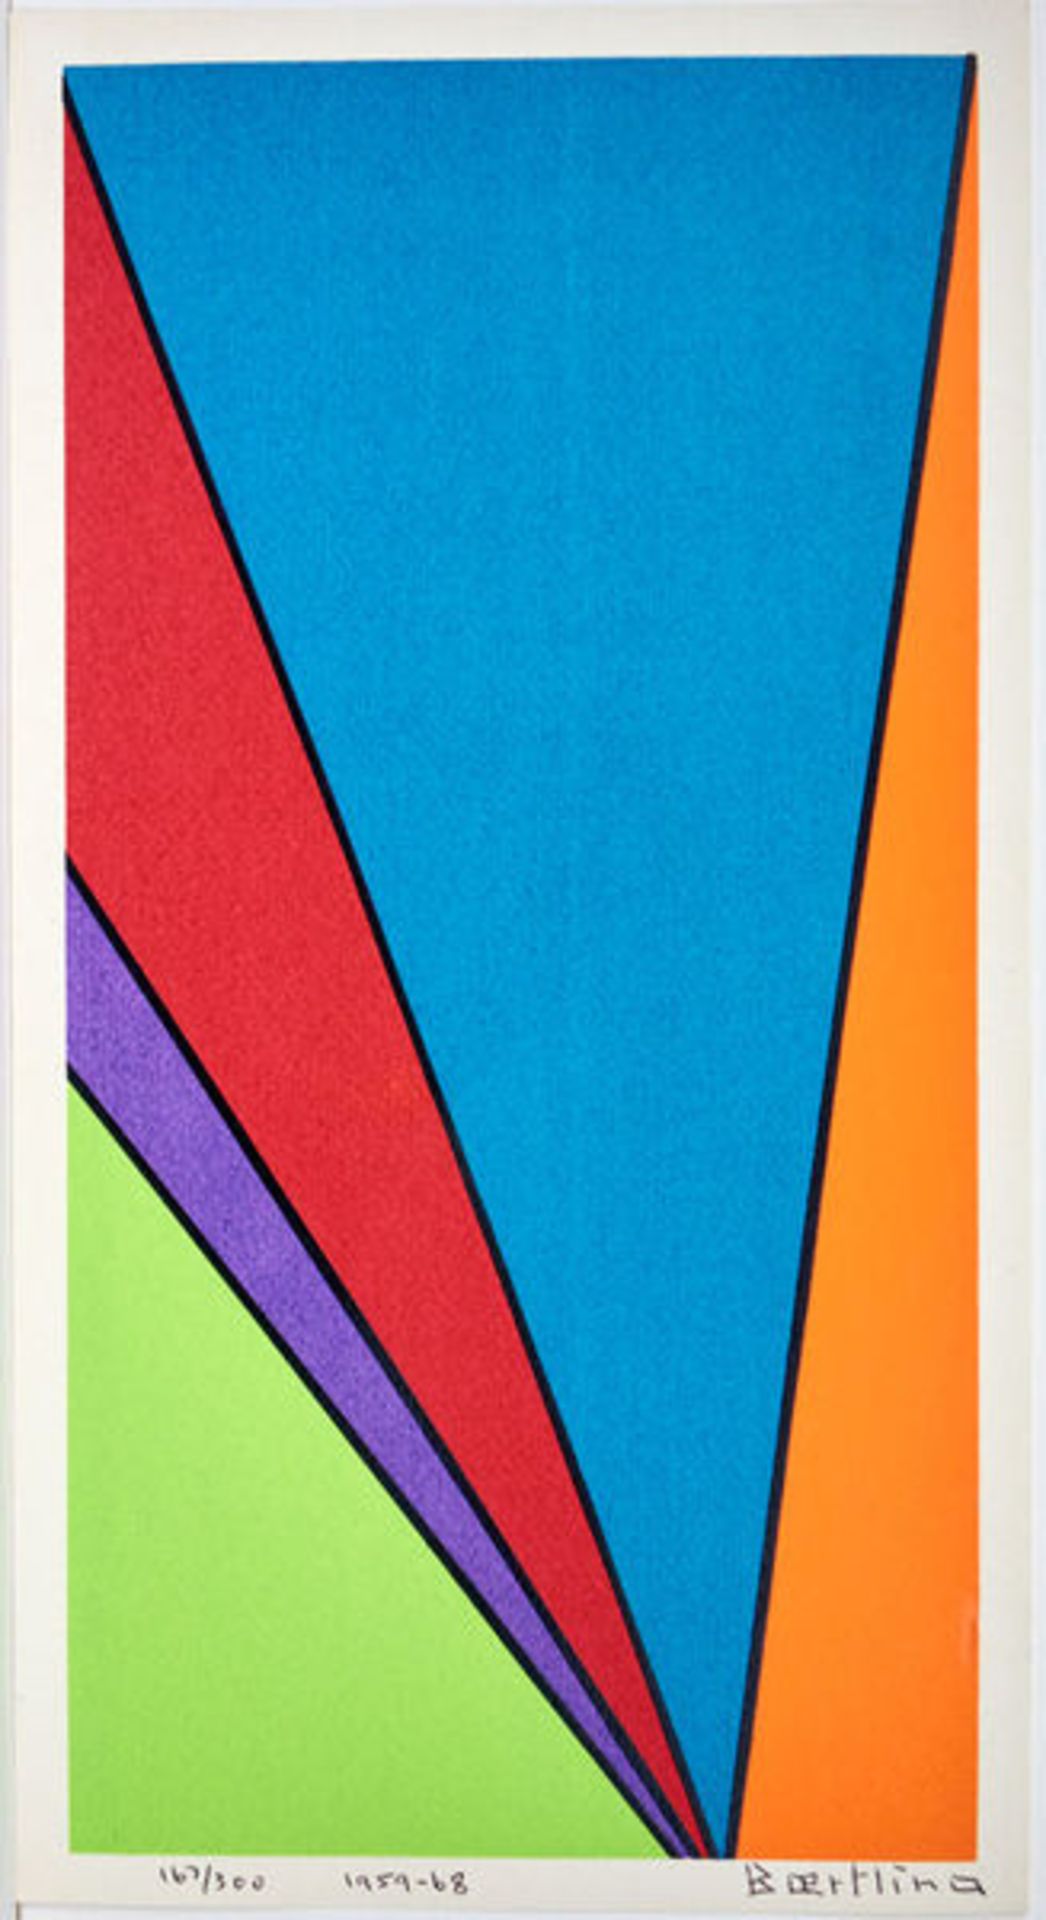 Baertling, Olle Farbserigraphie auf starkem Papier, 33,6 x 17,1 cm The angles of Baertling (1968)